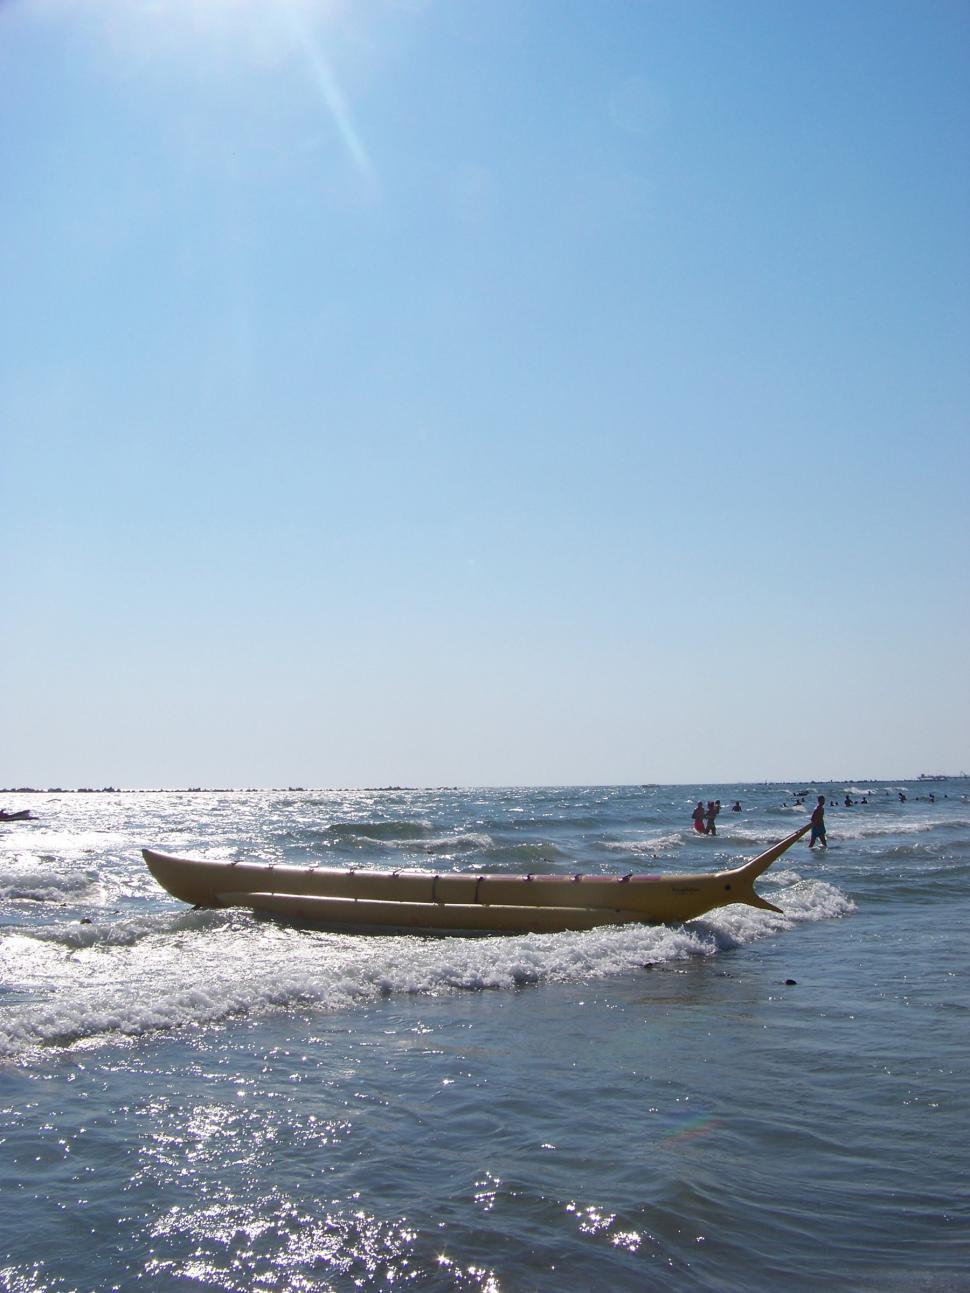 Free Image of Banana boat on Black Sea  